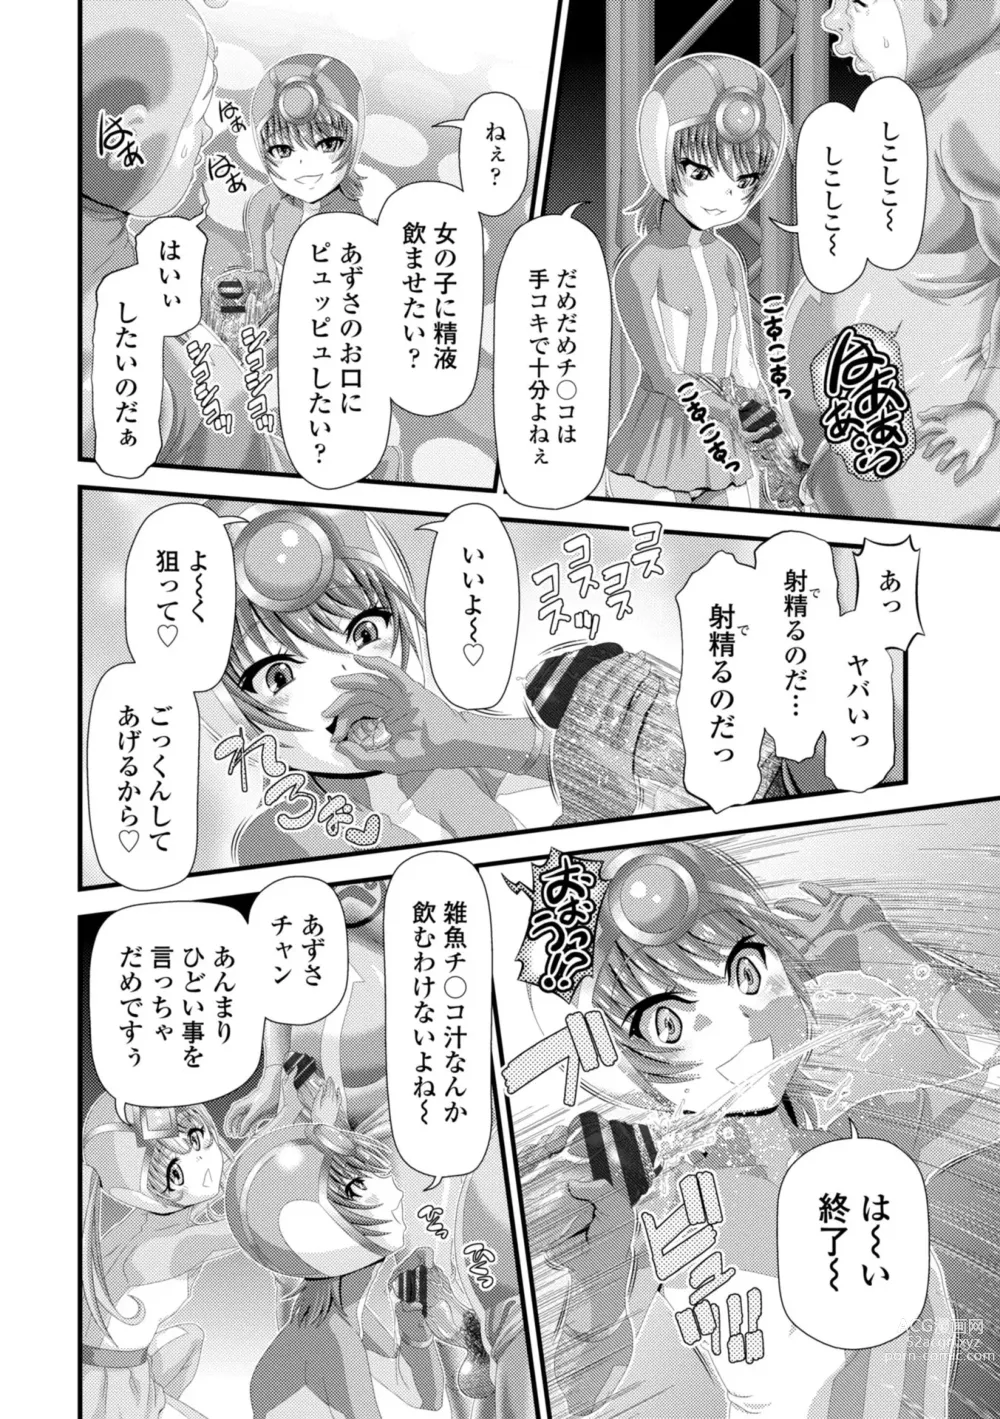 Page 8 of manga minimum material 1